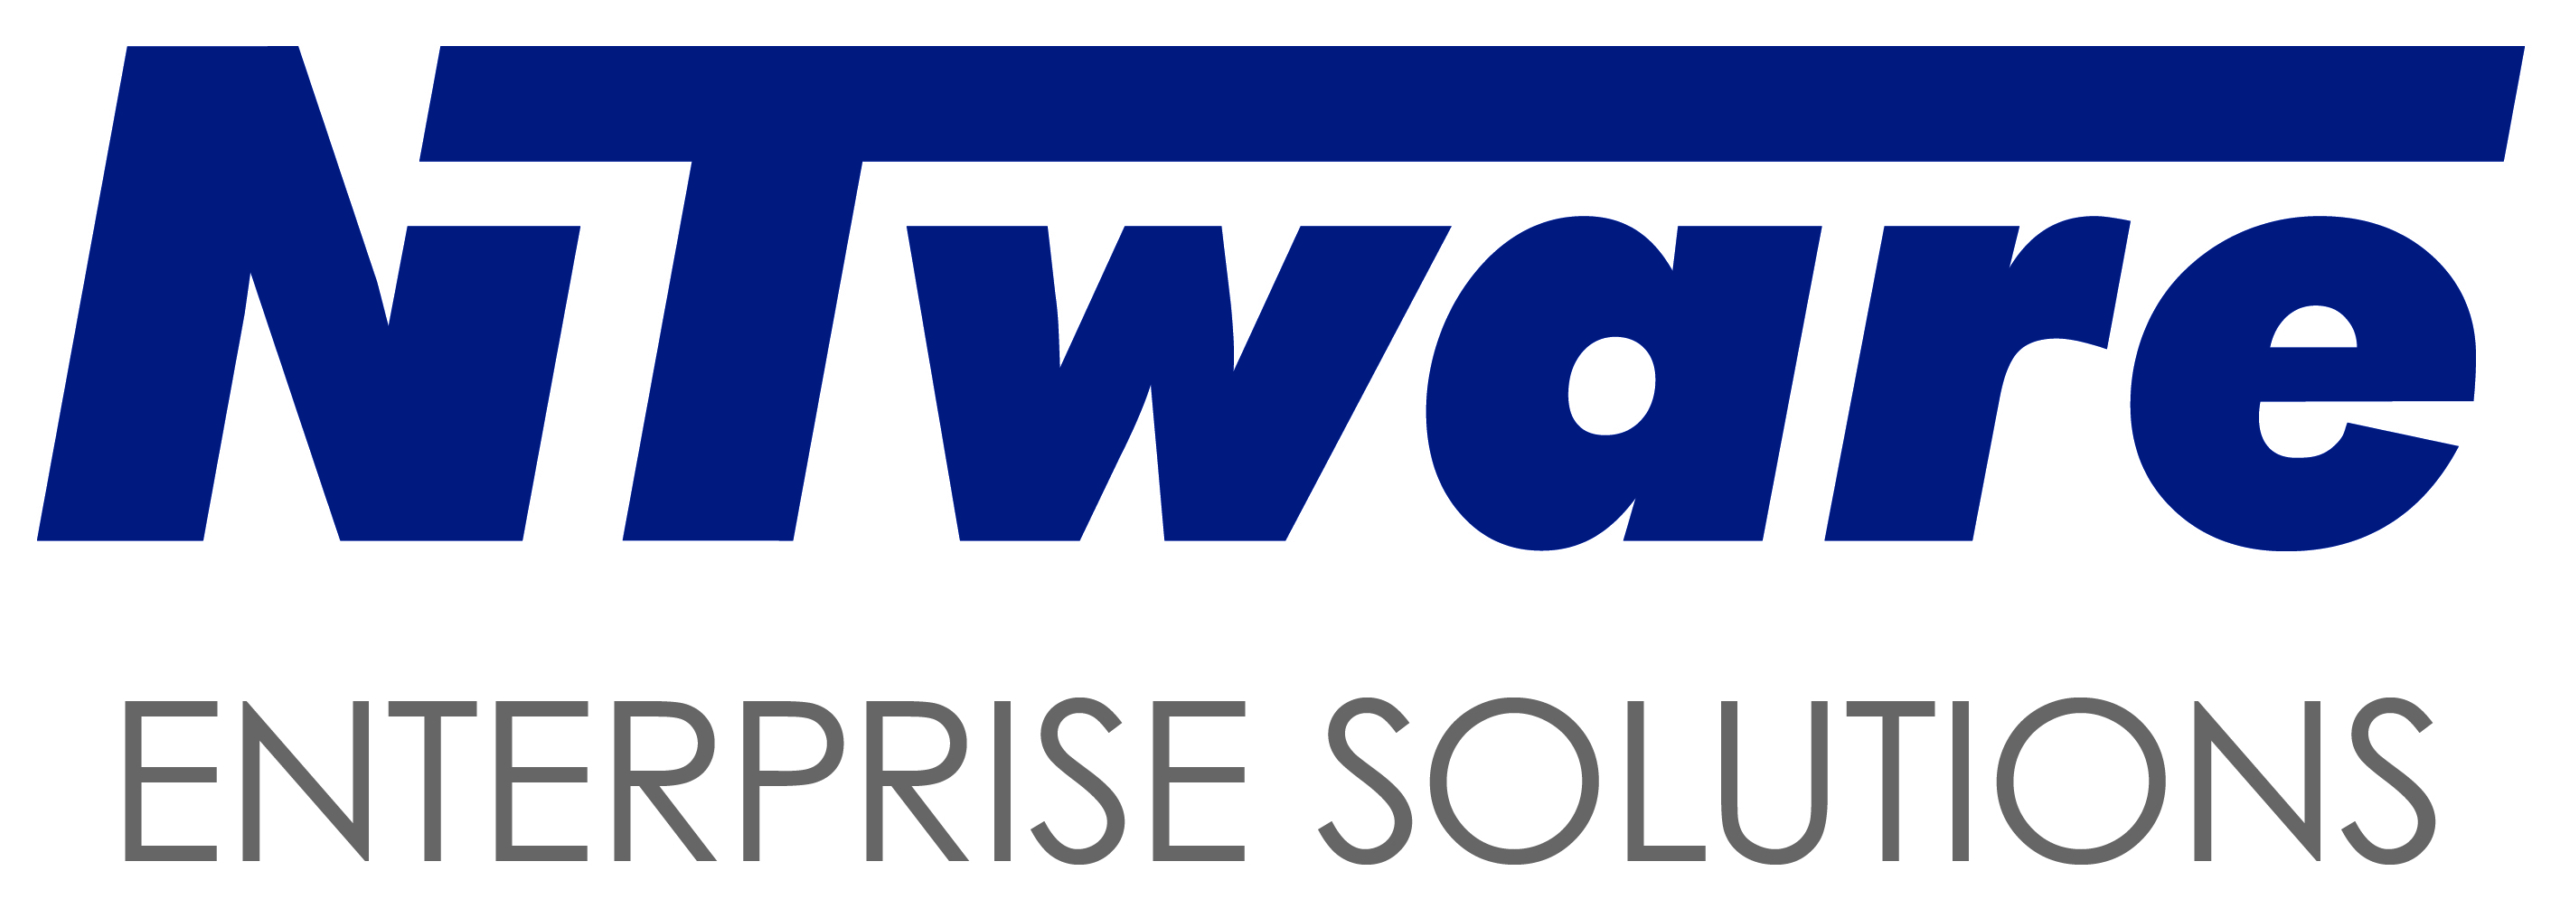 NT-ware Enterprise Solutions GmbH Logo